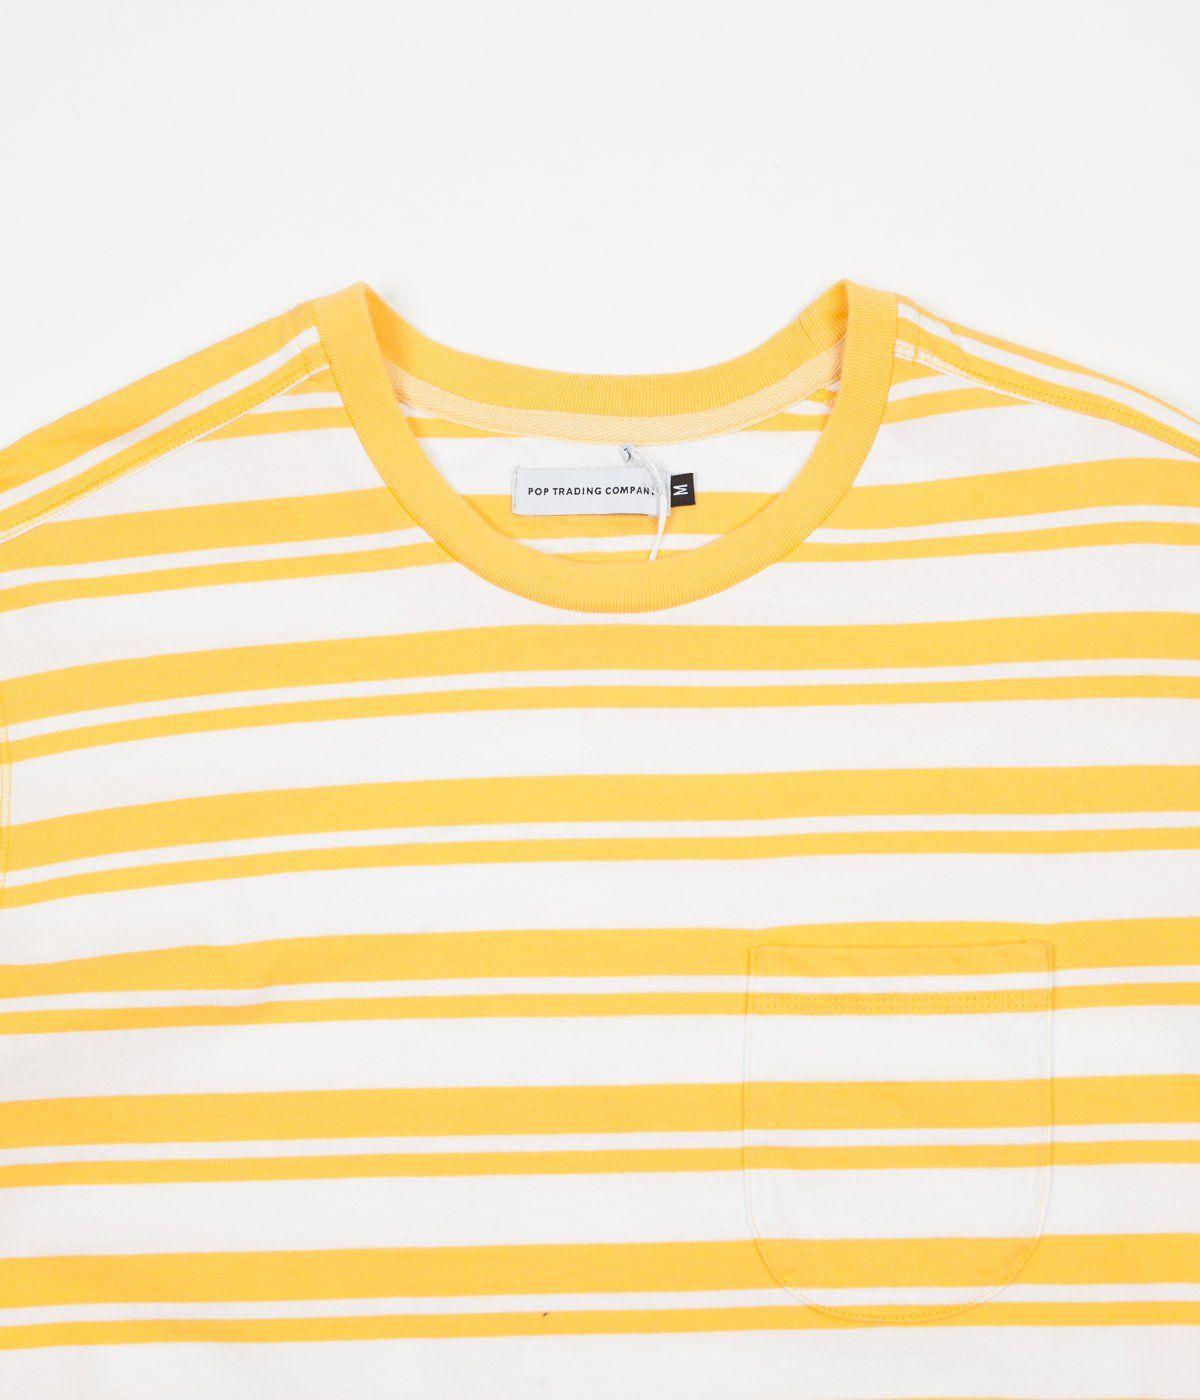 White with Yellow Stripe Logo - Pop Trading Company Striped Pocket T-Shirt - Yellow / White | Flatspot